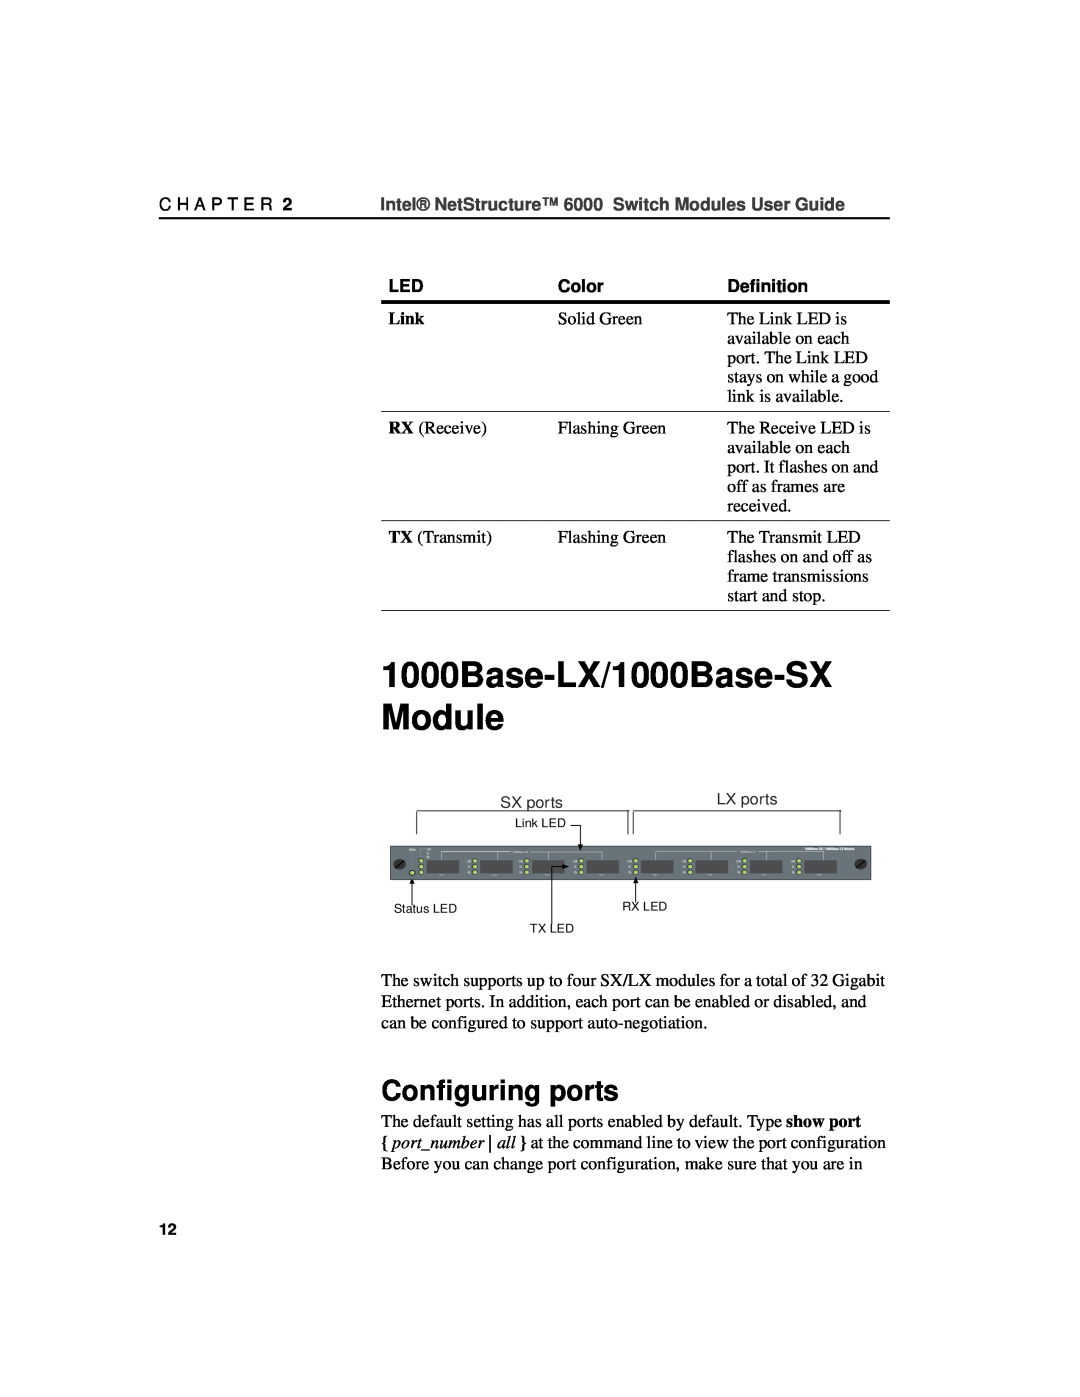 Intel A21721-001 Configuring ports, 1000Base-LX/1000Base-SX Module, Intel NetStructure 6000 Switch Modules User Guide 